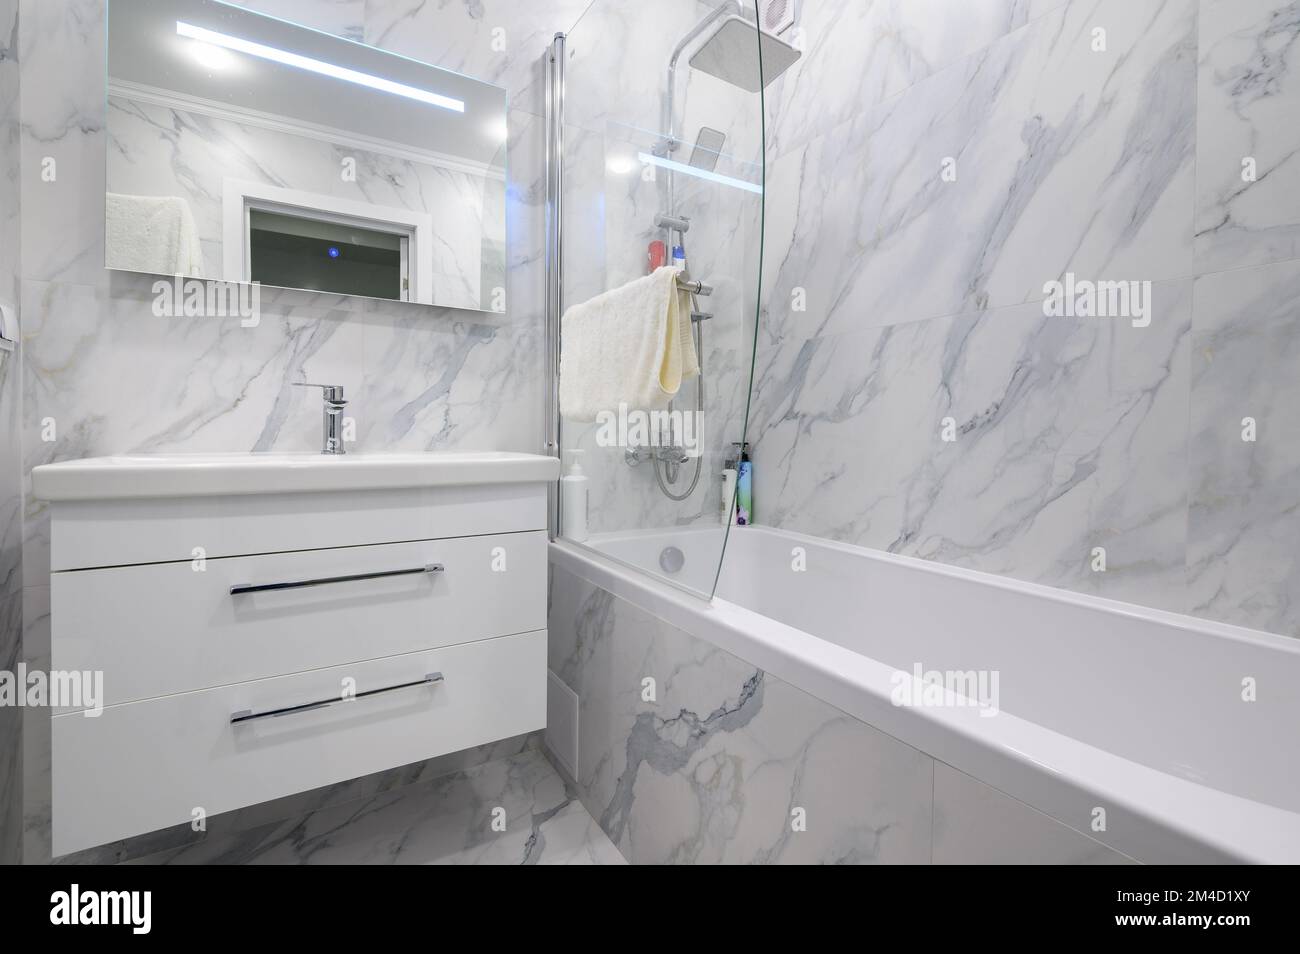 https://c8.alamy.com/comp/2M4D1XY/modern-white-marble-bathroom-interior-2M4D1XY.jpg